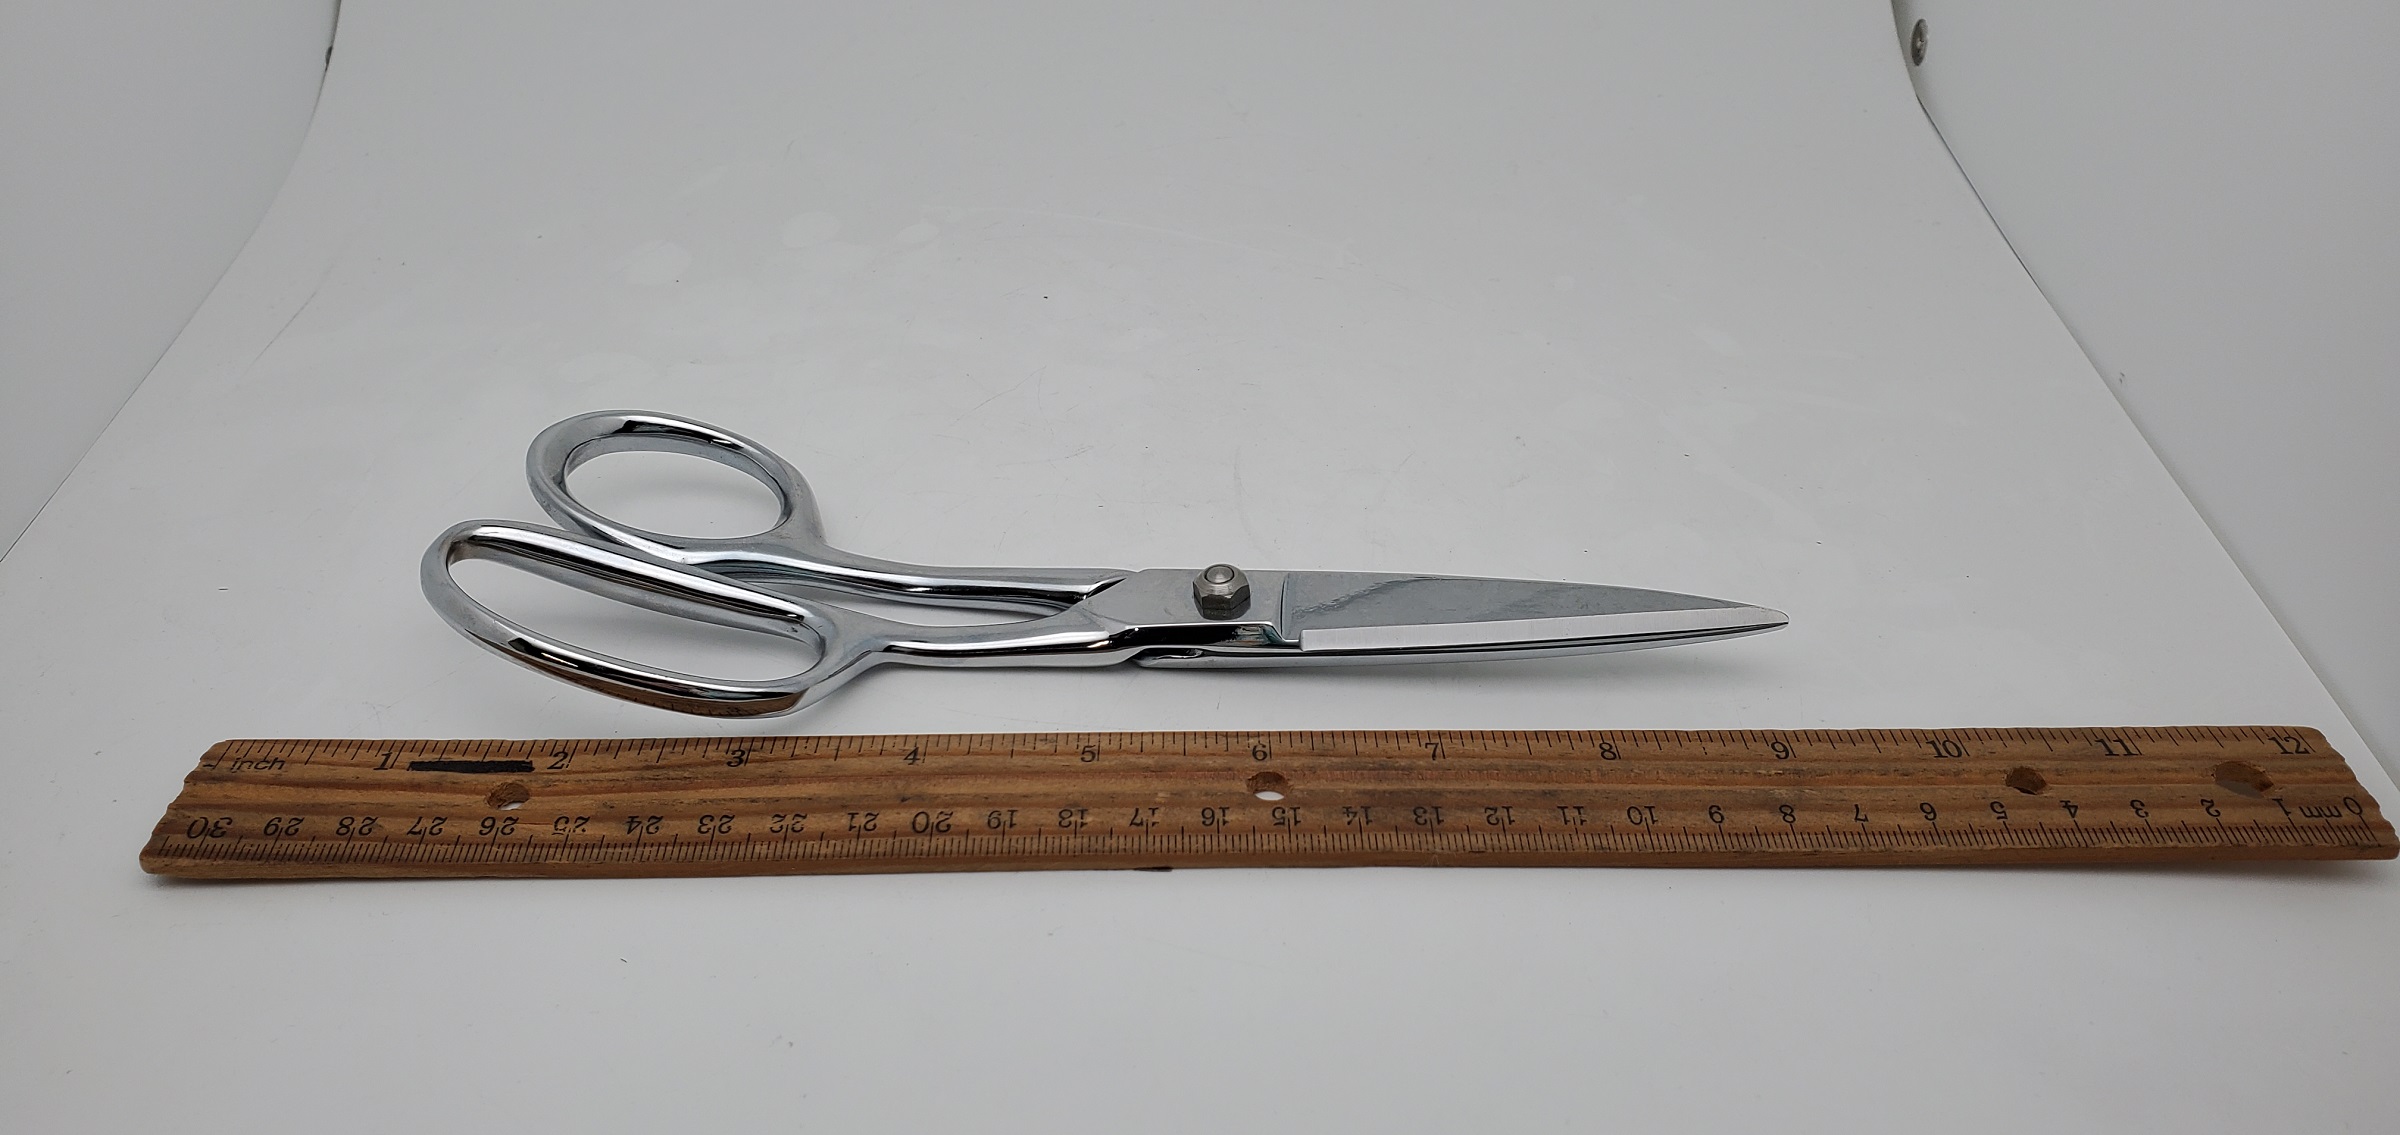 Gingher 4 Classic Embroidery Scissors (scissor 21)